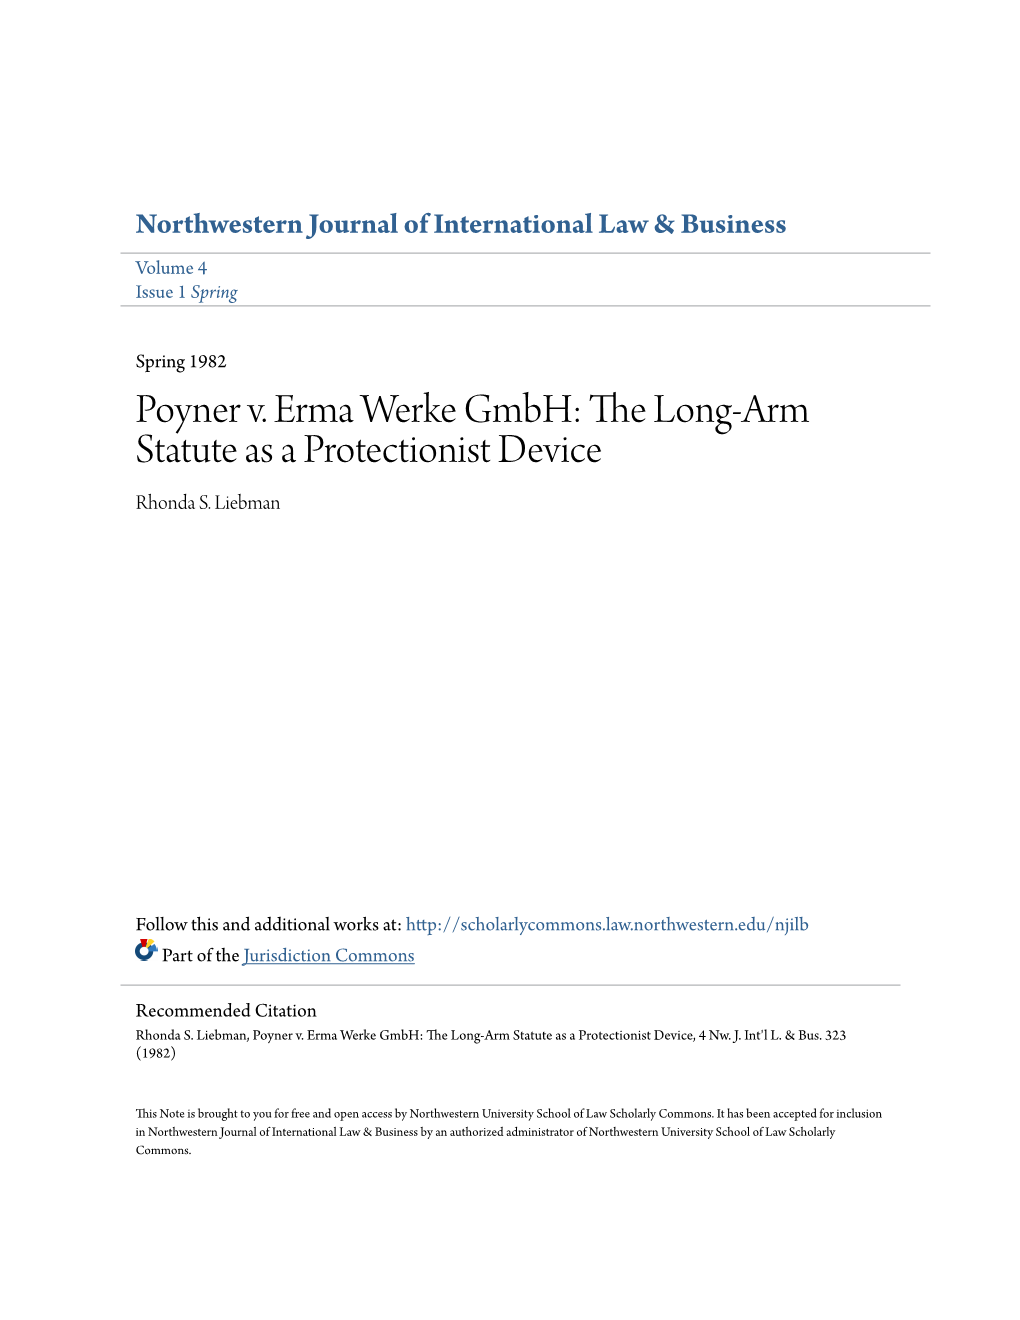 Poyner V. Erma Werke Gmbh: the Long-Arm Statute As a Protectionist Device Rhonda S